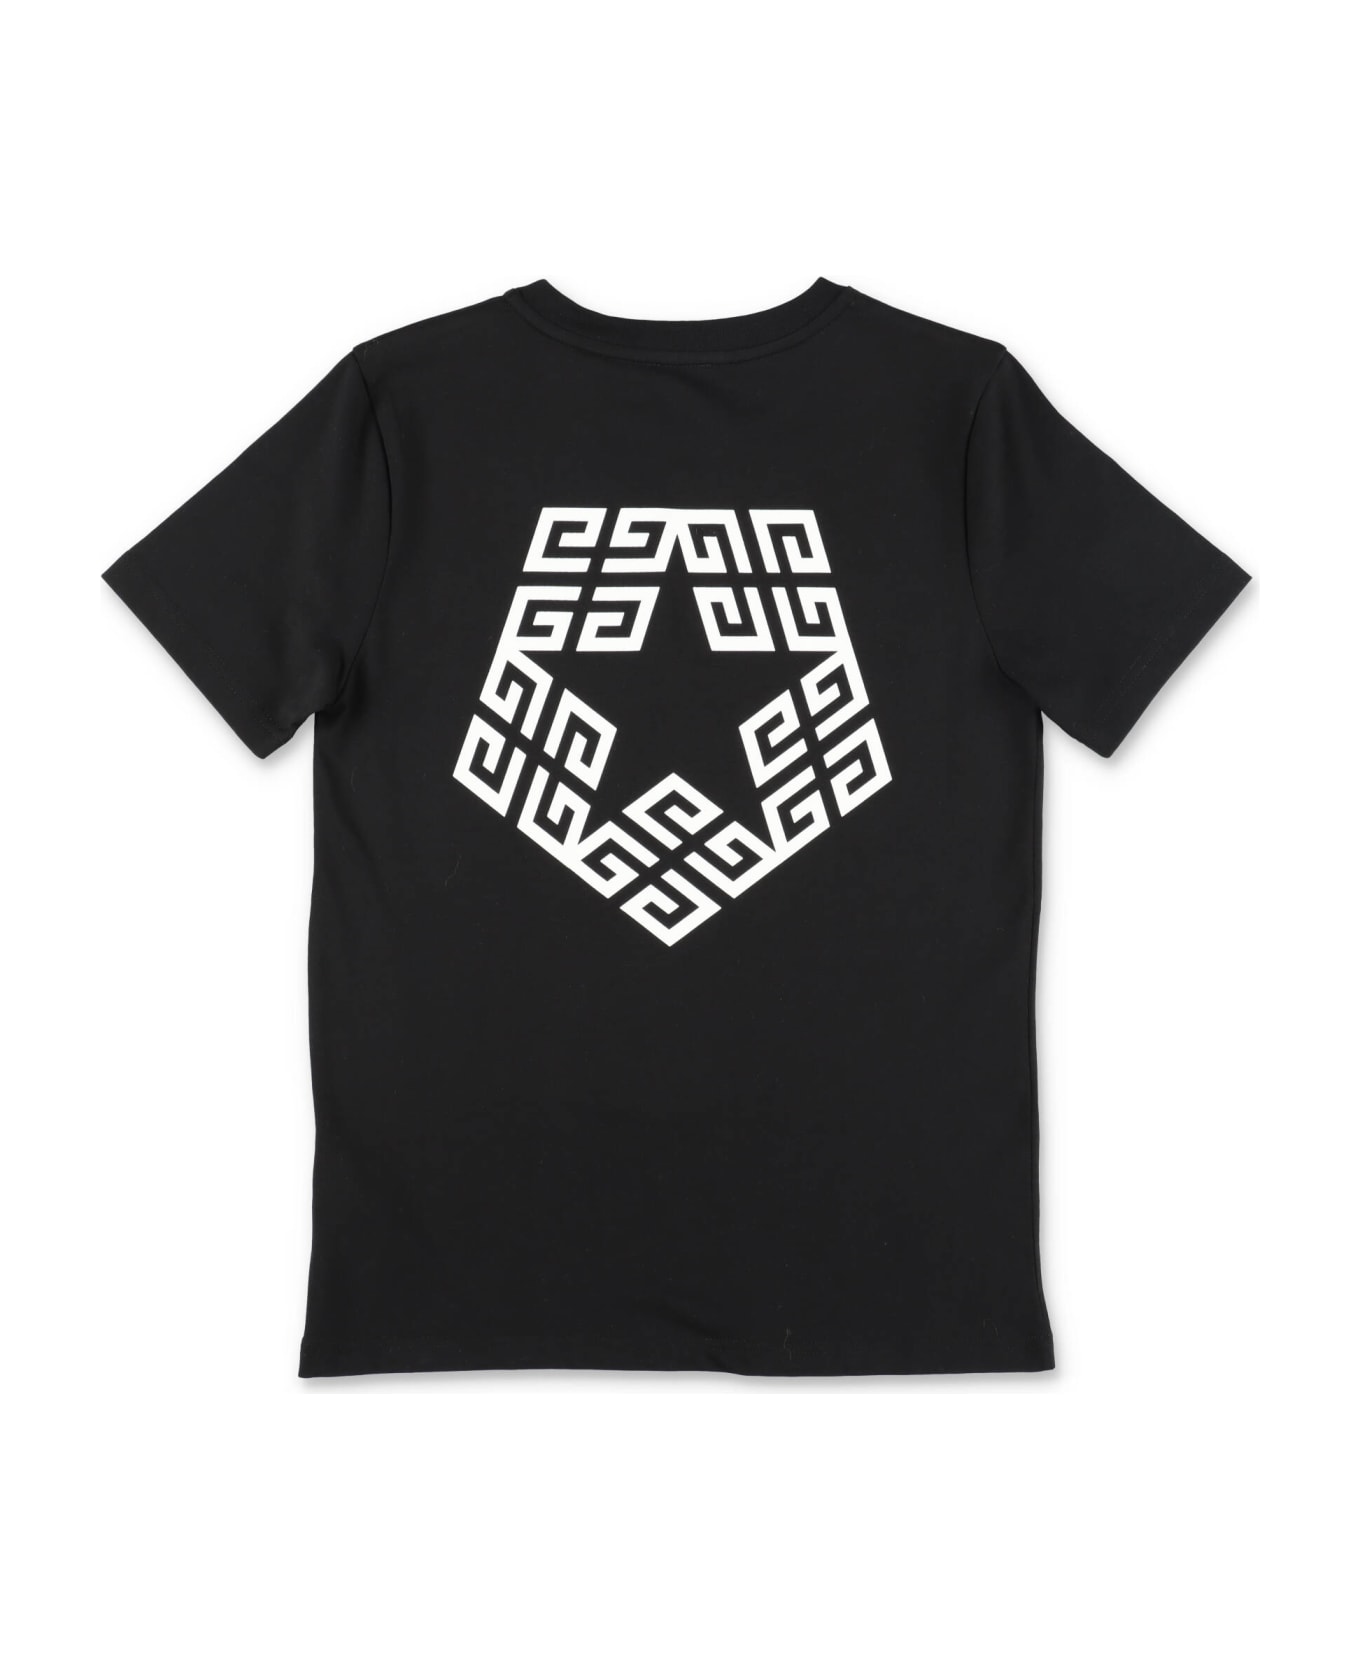 Givenchy T-shirt Nera In Jersey Di Cotone Bambino - Nero Tシャツ＆ポロシャツ